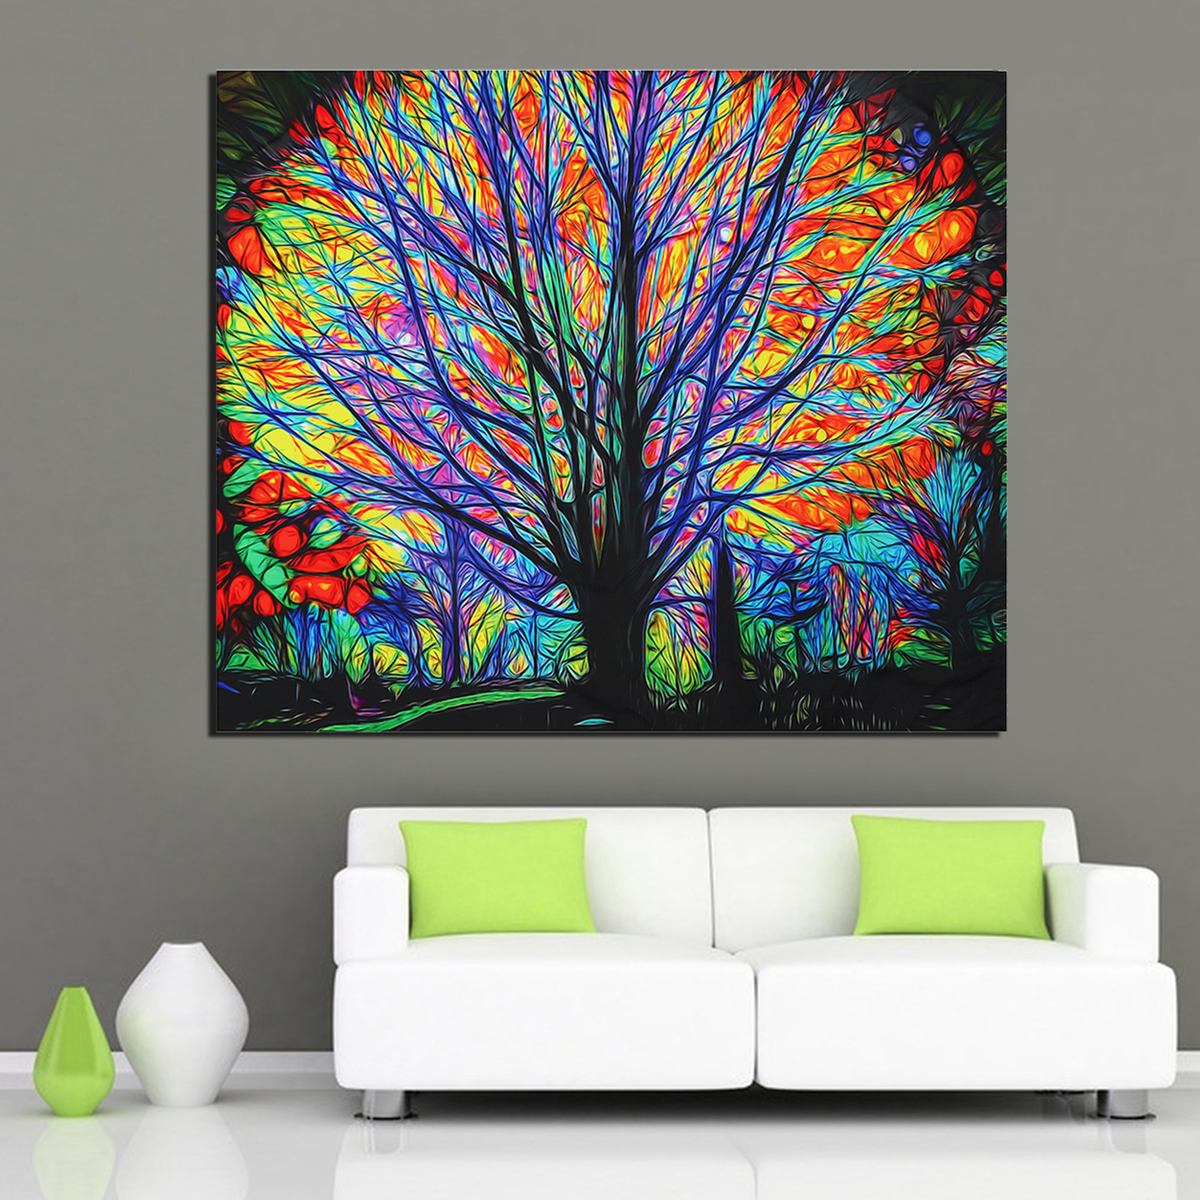 

Art Wall Hanging Comfy Гобелен Colorful Дерево Стиль Psychedelic украшения спальни